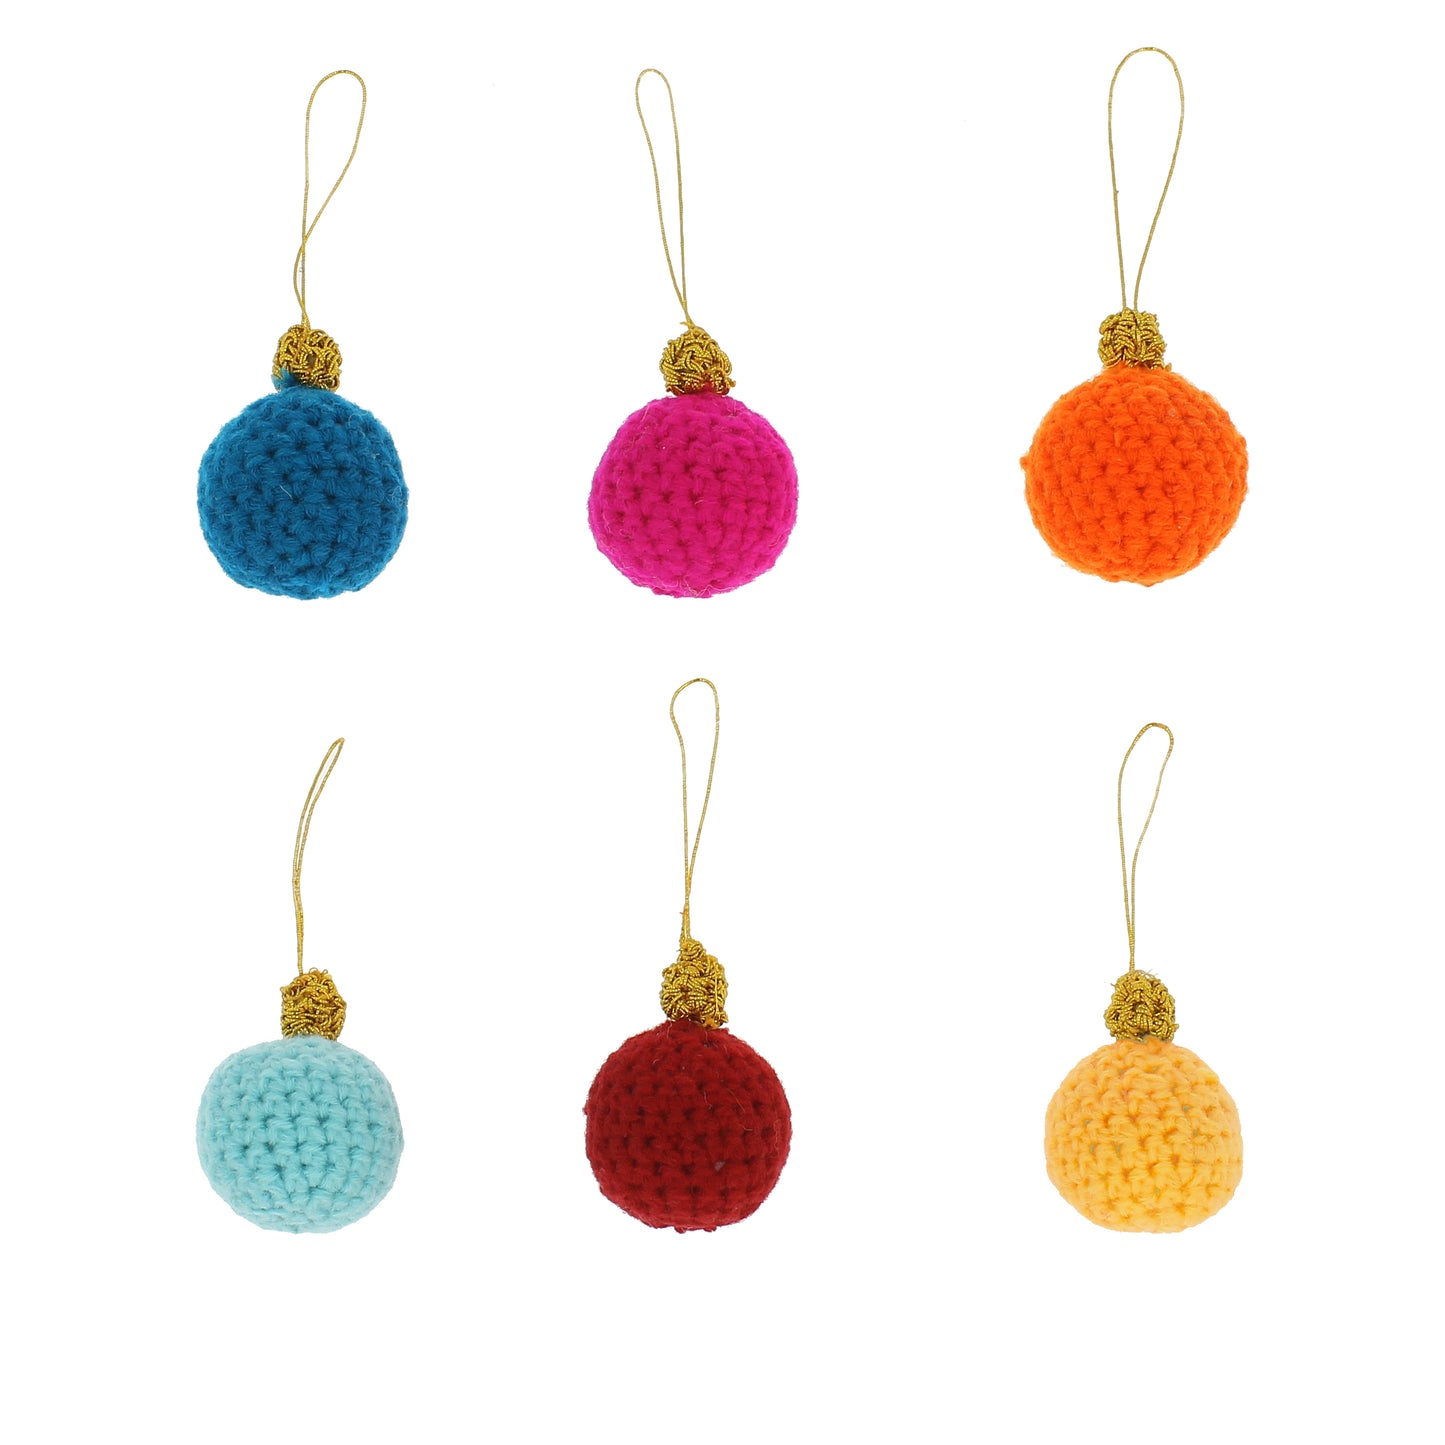 Mini Crochet Baubles - Set of 6